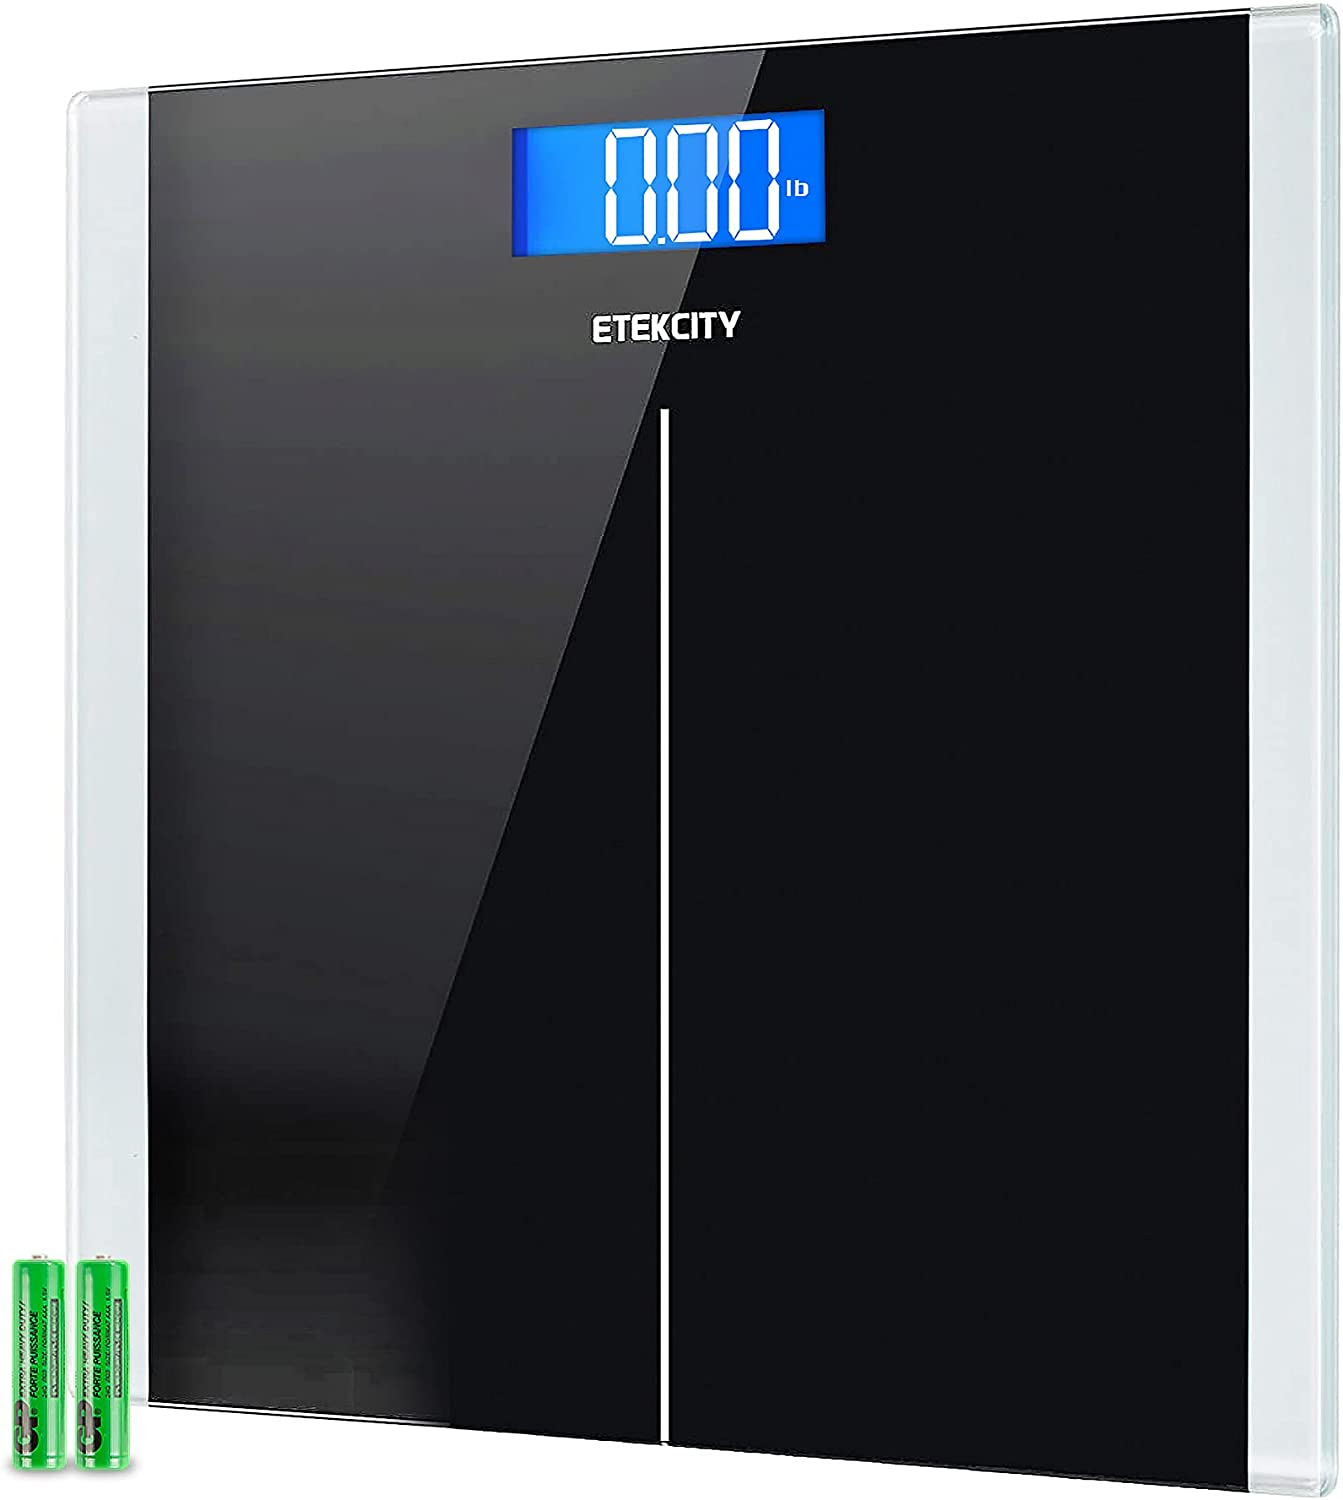 Etekcity Digital Body Weight. 4700units. EXW Los Angeles